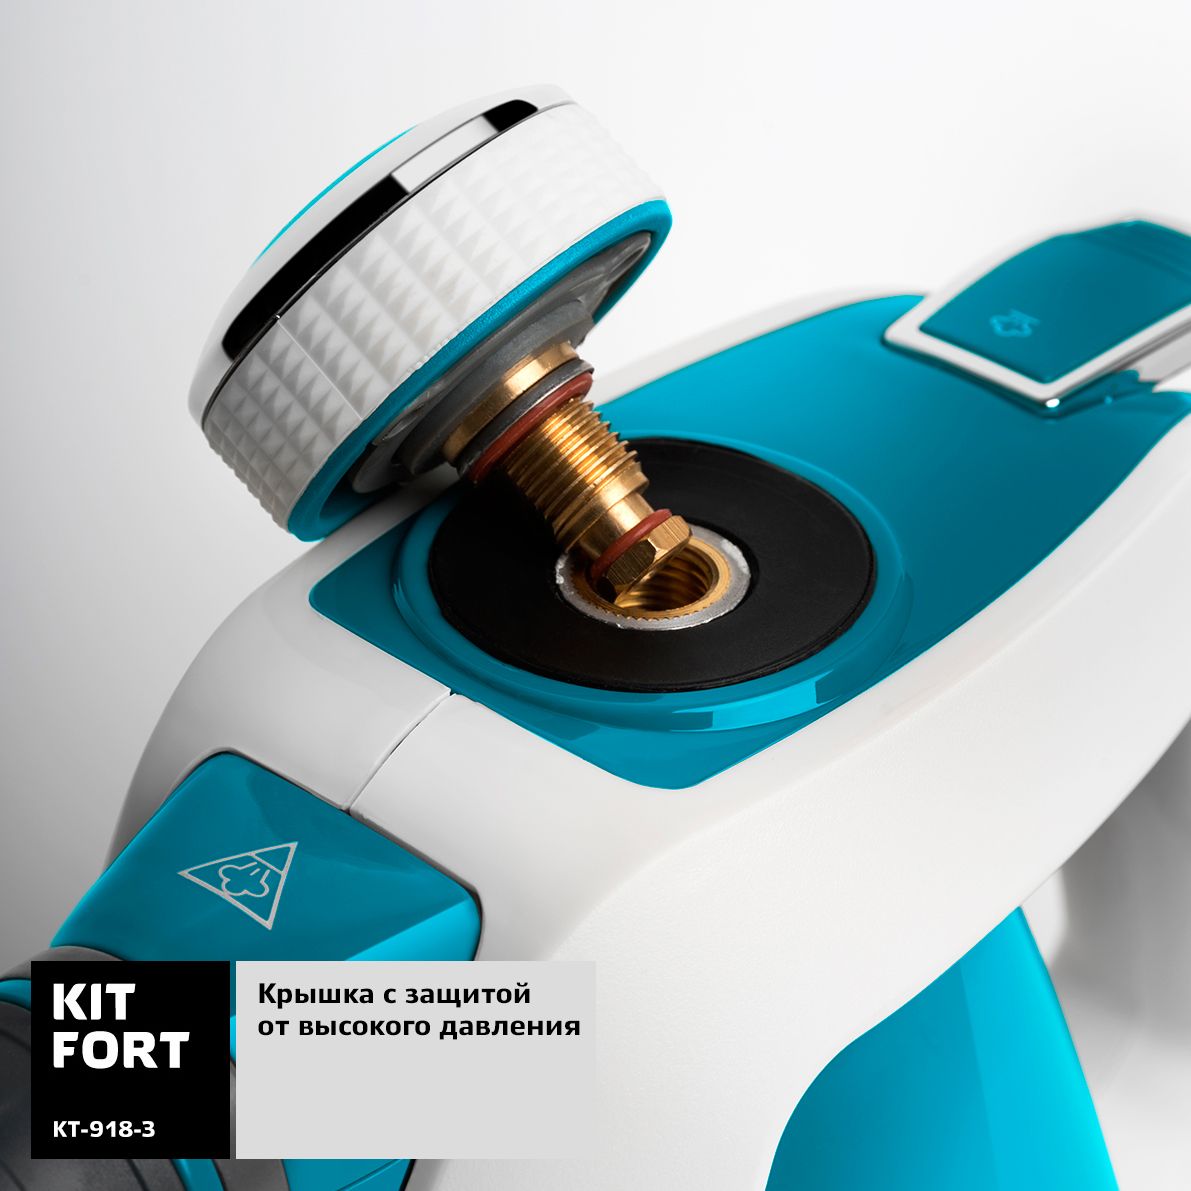  Kitfort KT-918-3, Turquoise